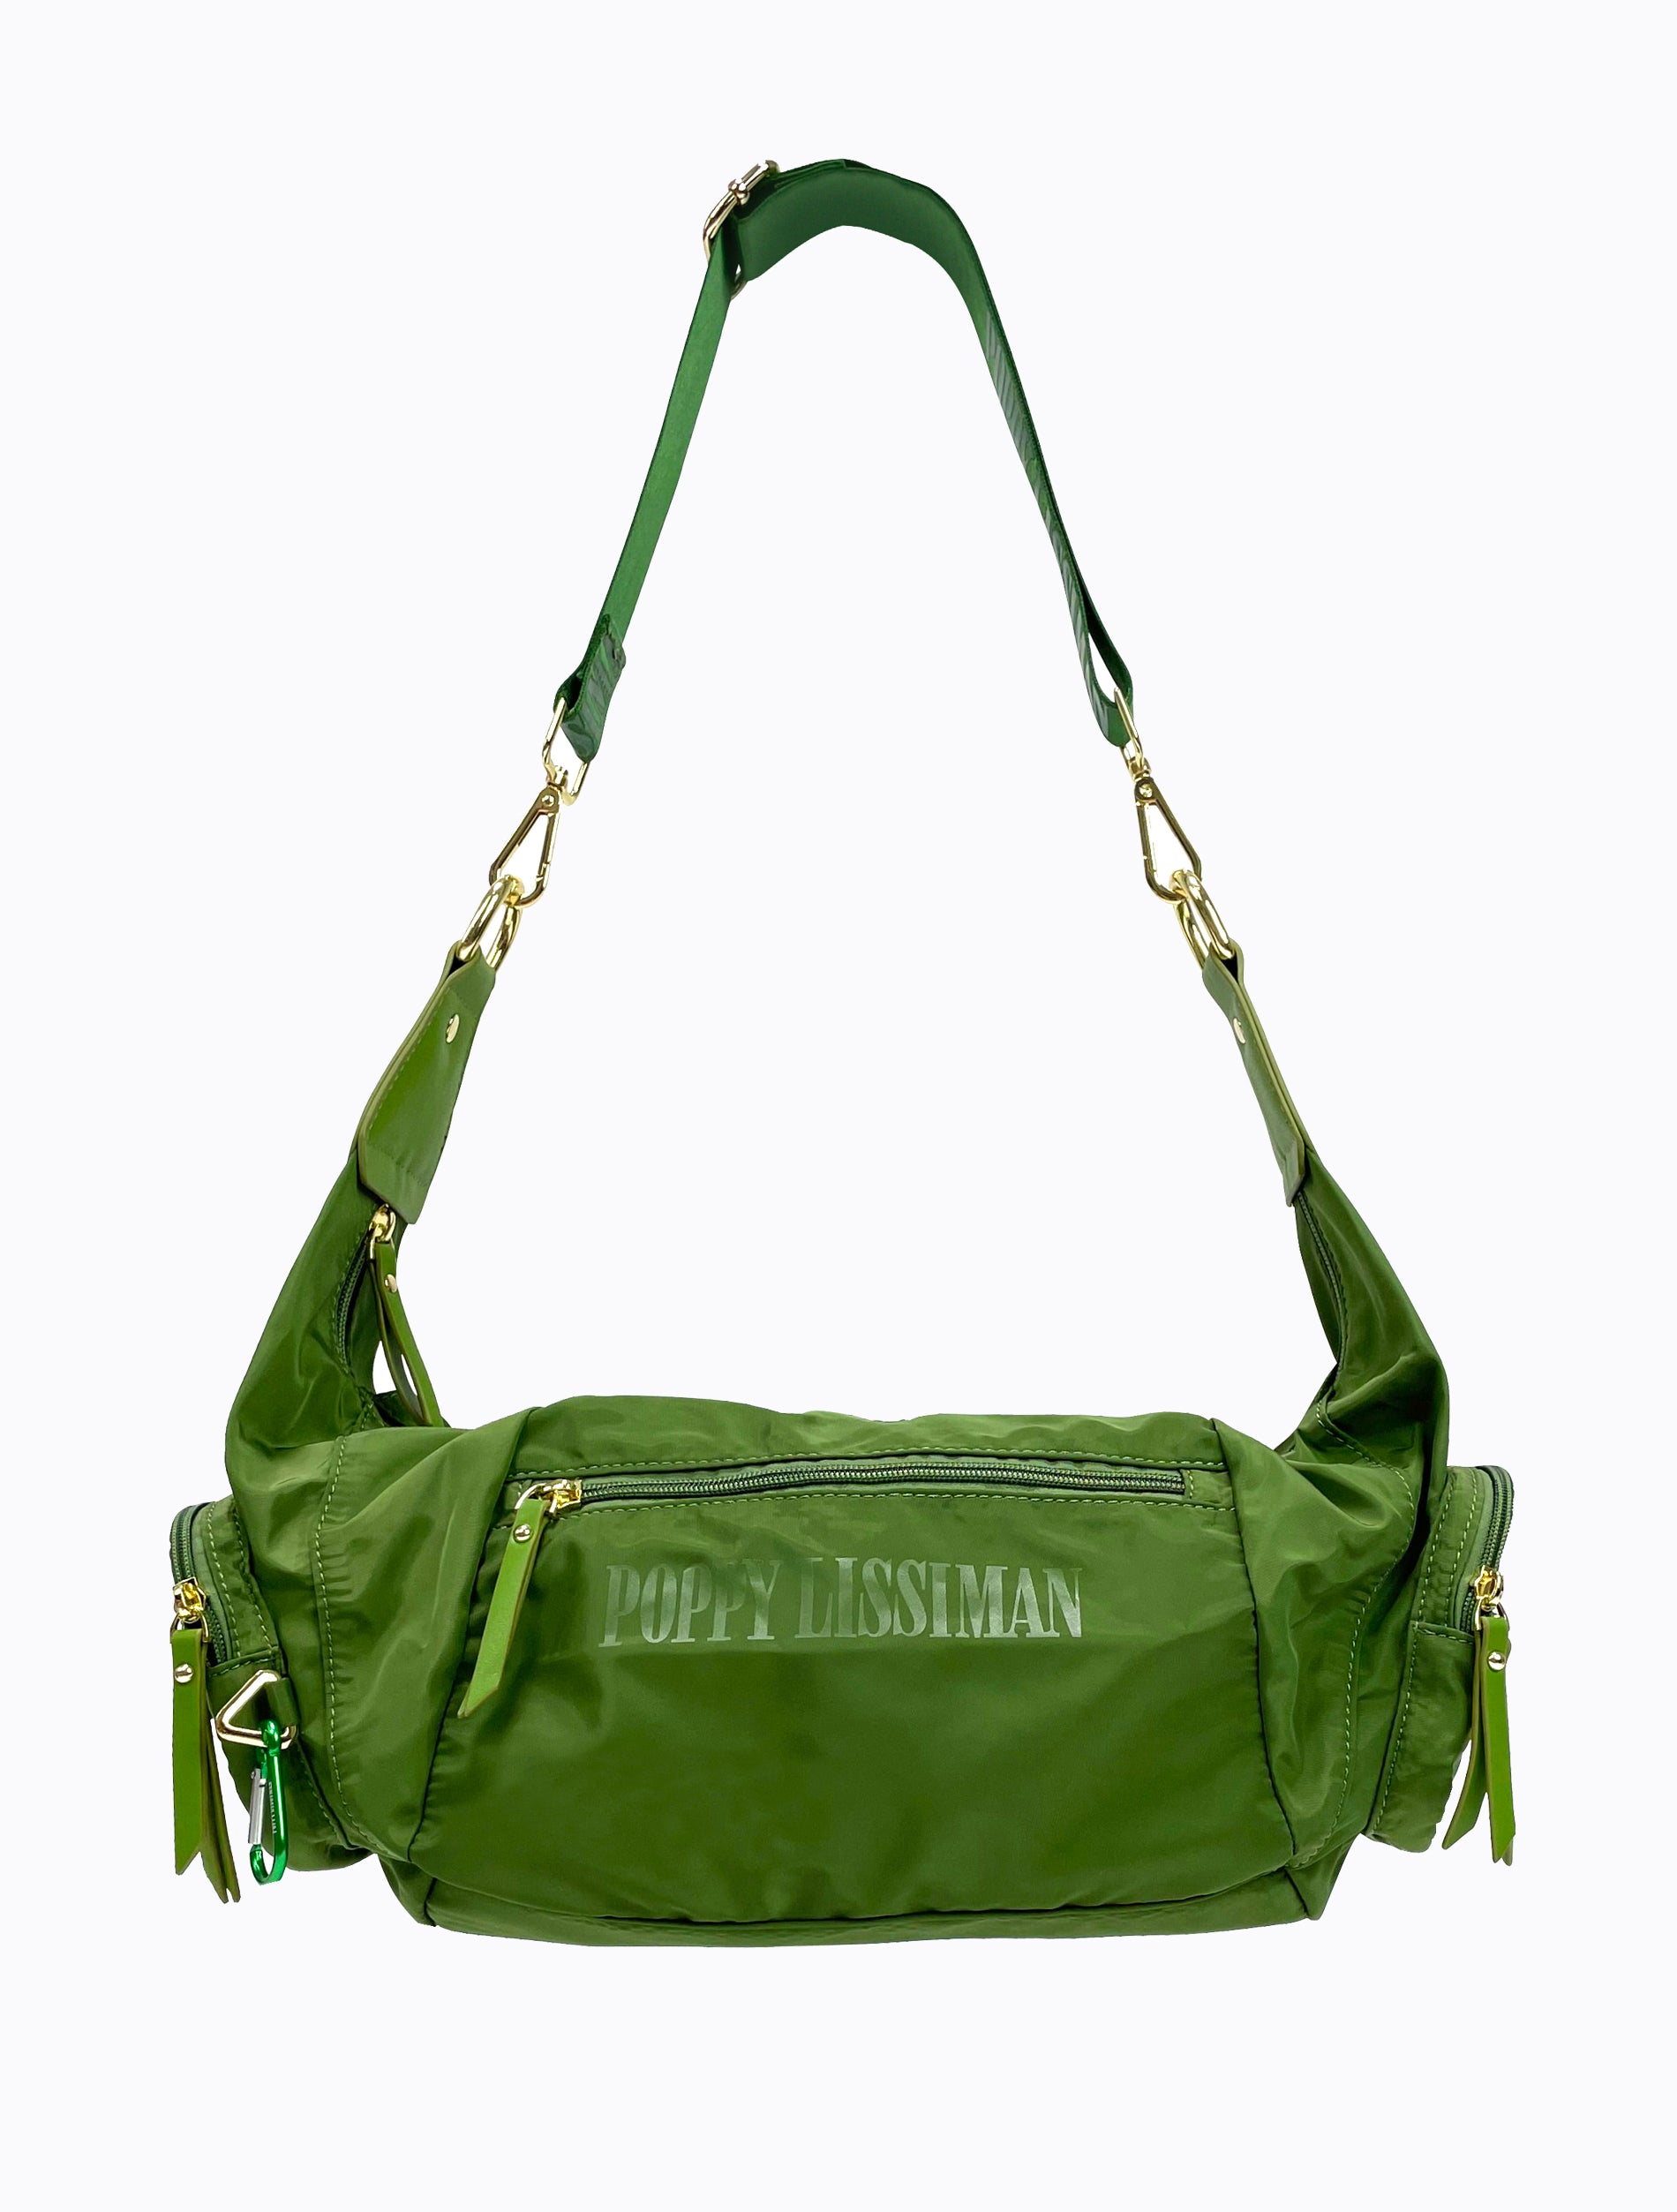 Olive green Ladies Fashion PU Leather Handbag With Sling Bag